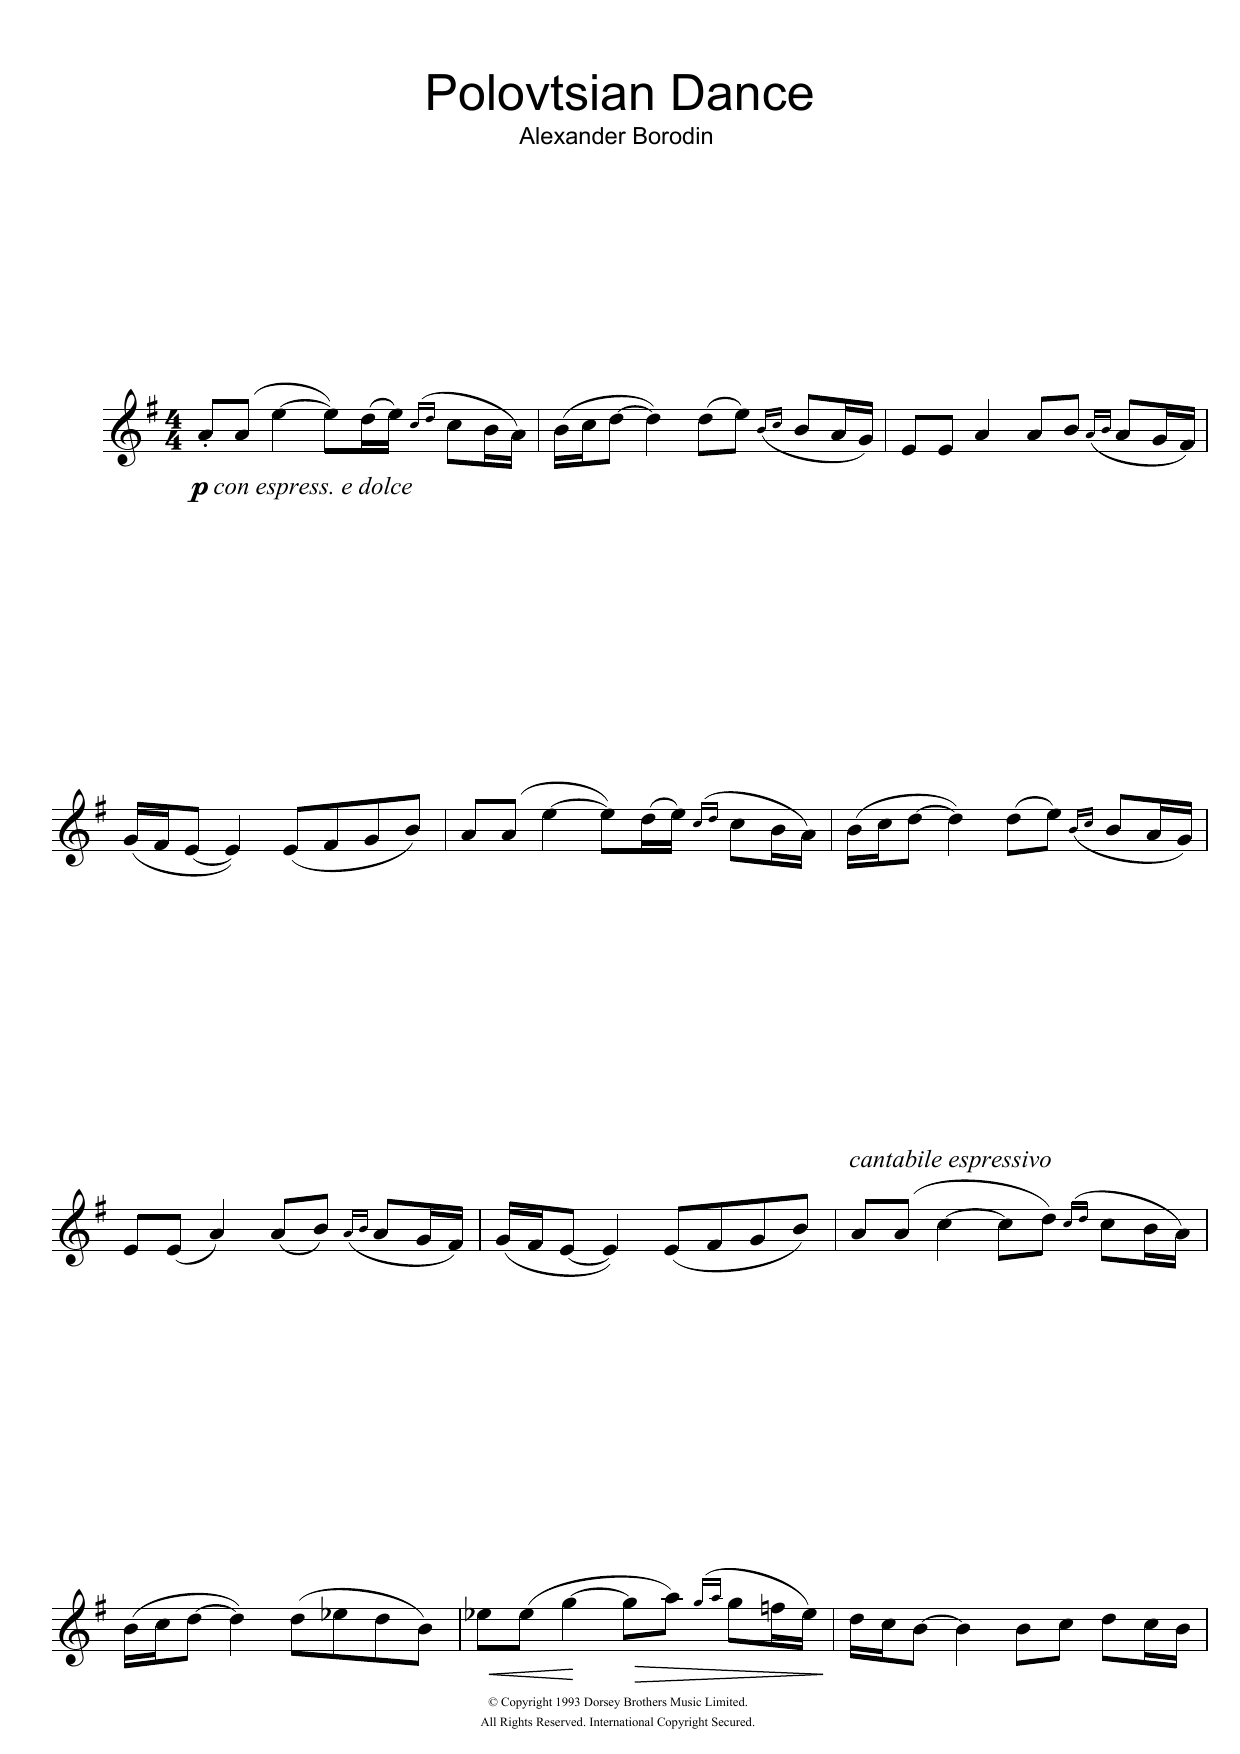 Alexander Borodin Polovtsian Dance Sheet Music Notes & Chords for Clarinet - Download or Print PDF